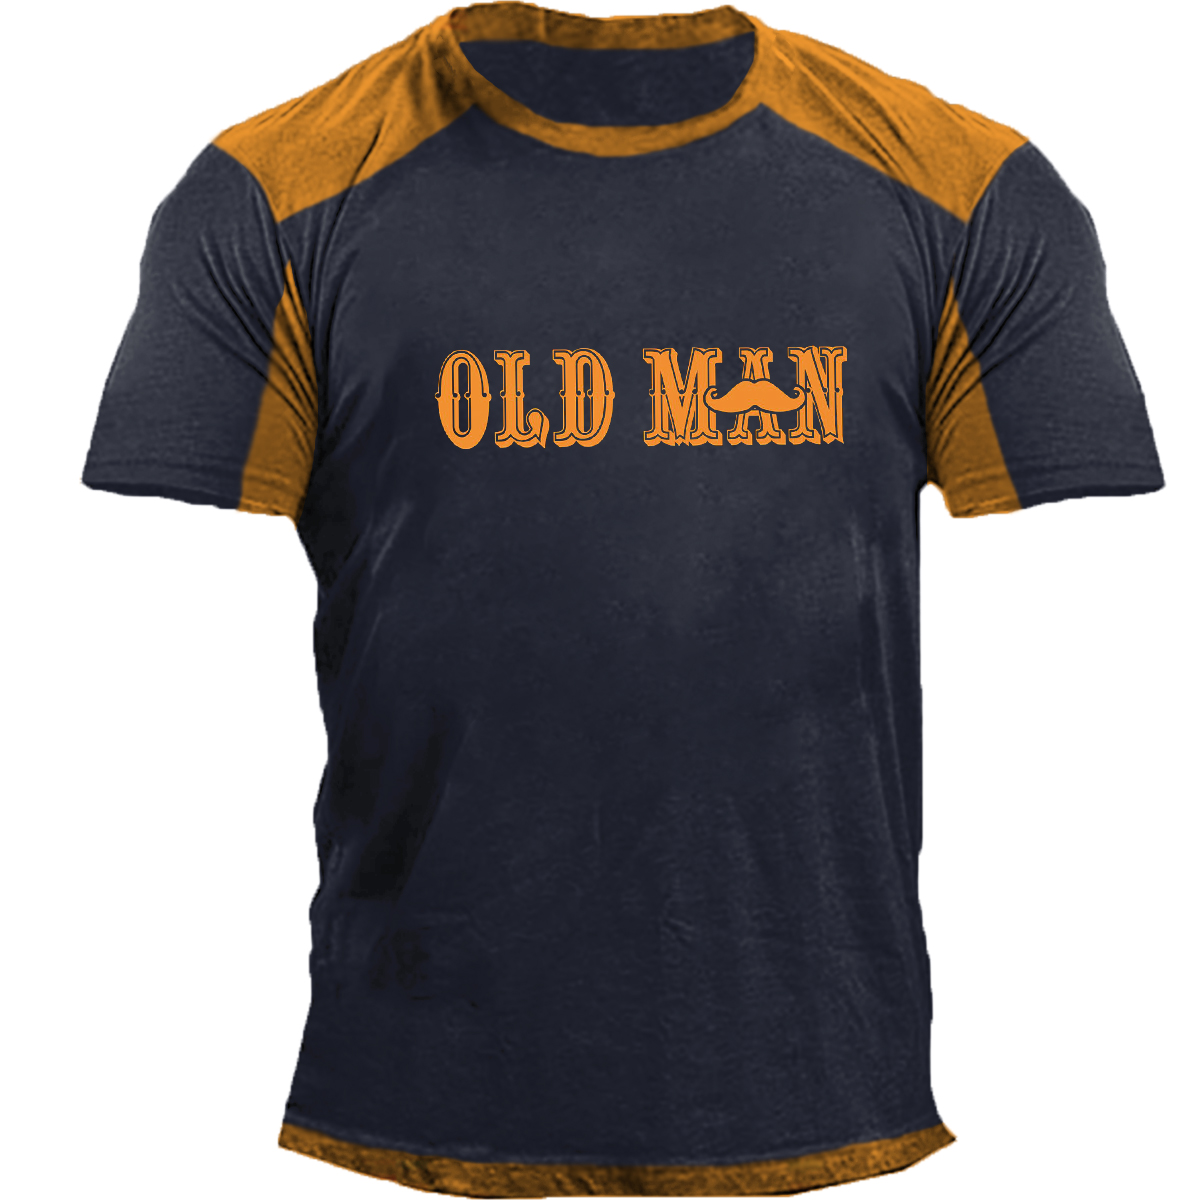 Men's Vintage Old Man Chic Short Sleeve Round Neck T-shirt